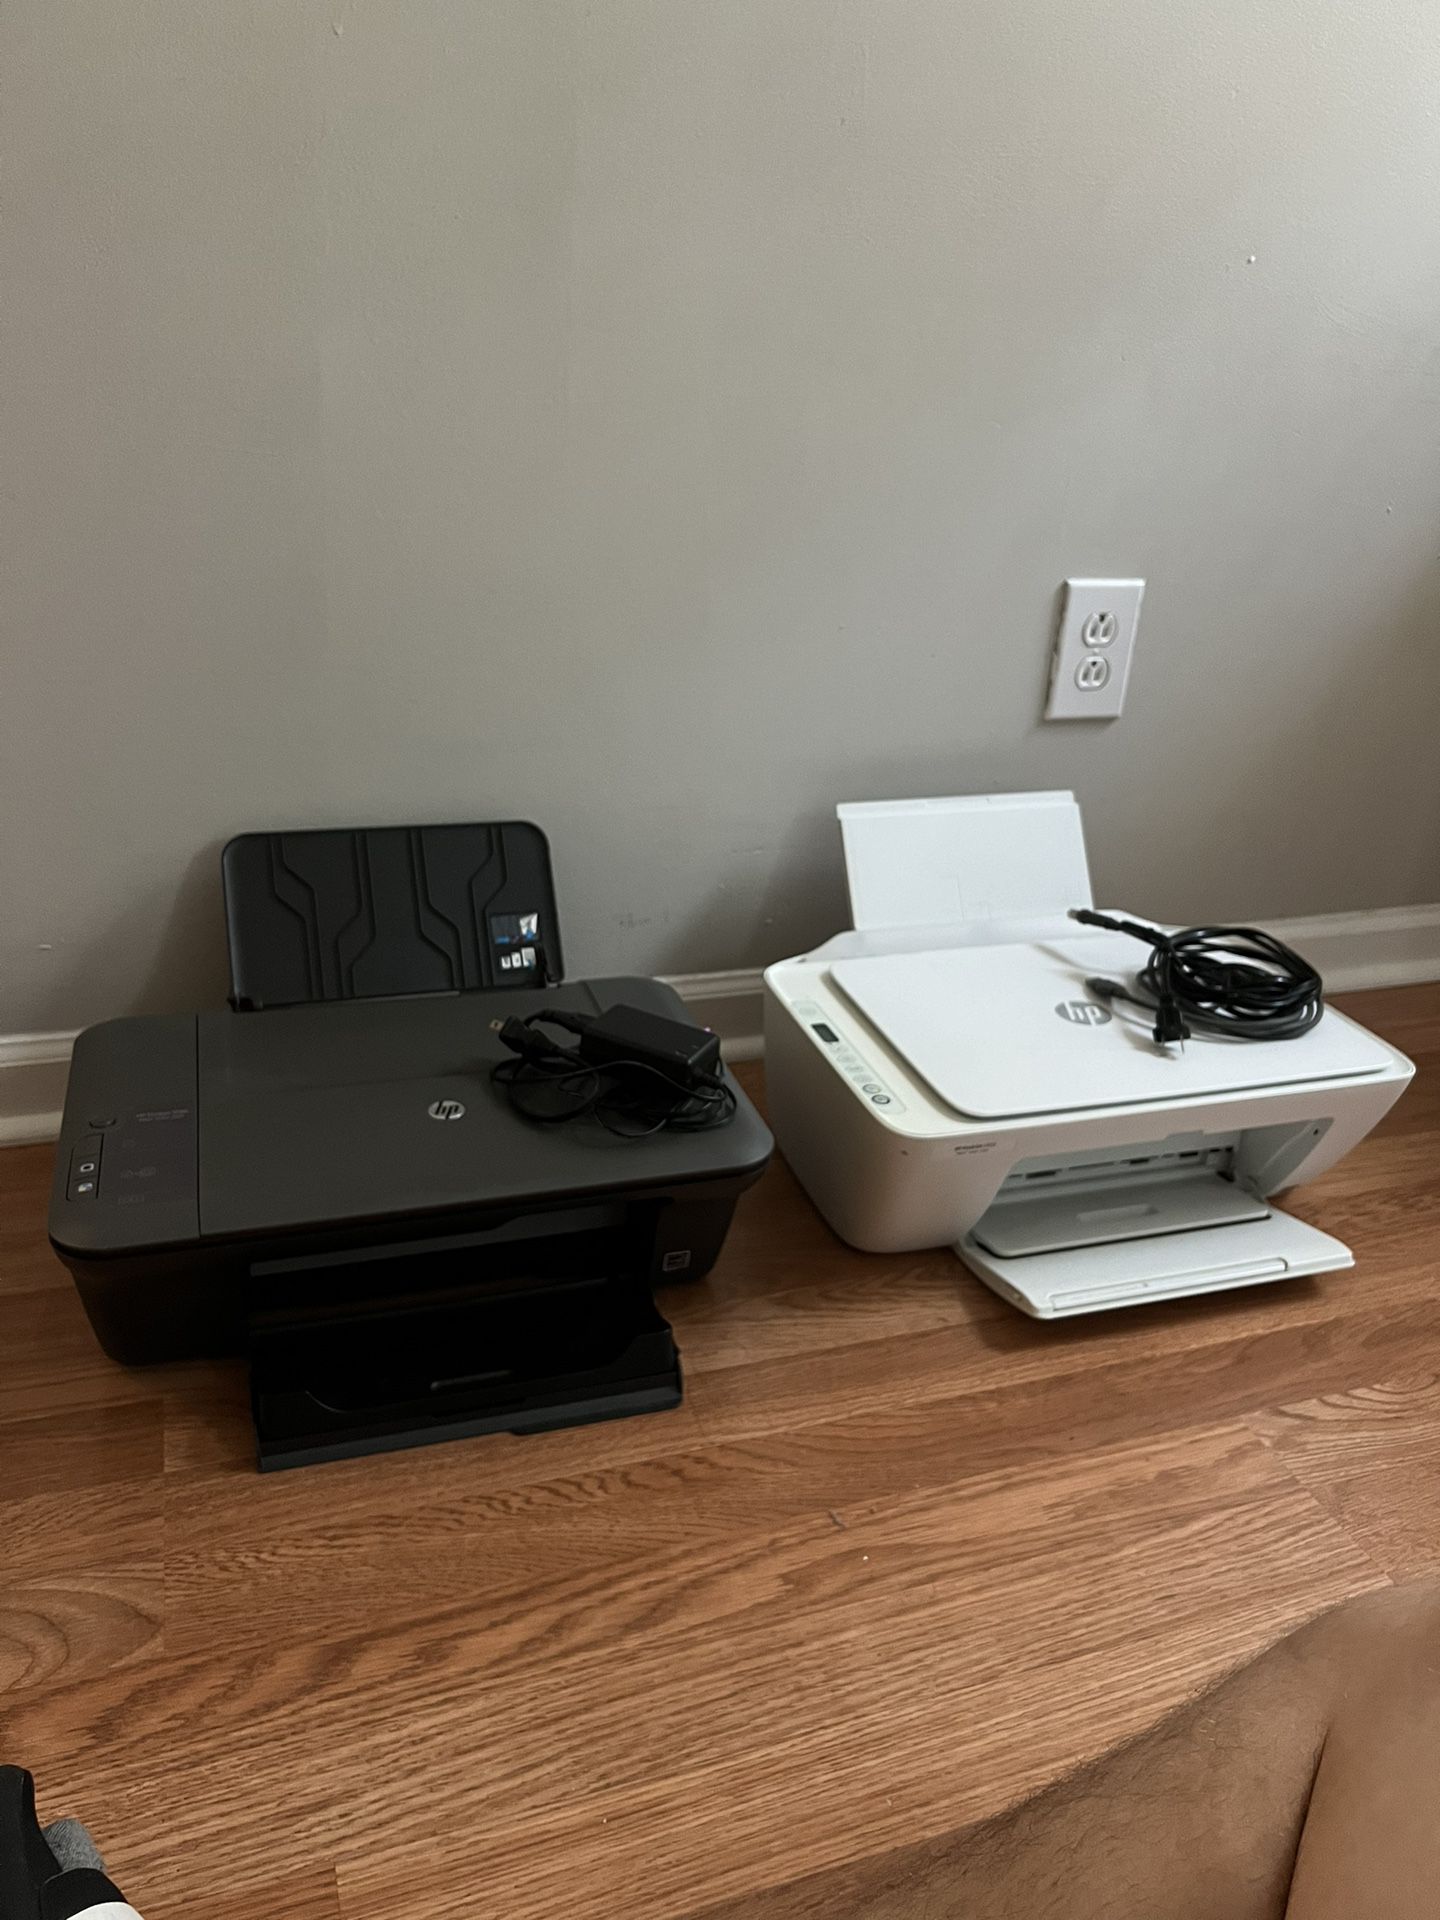 2 HP Deskjet Printers